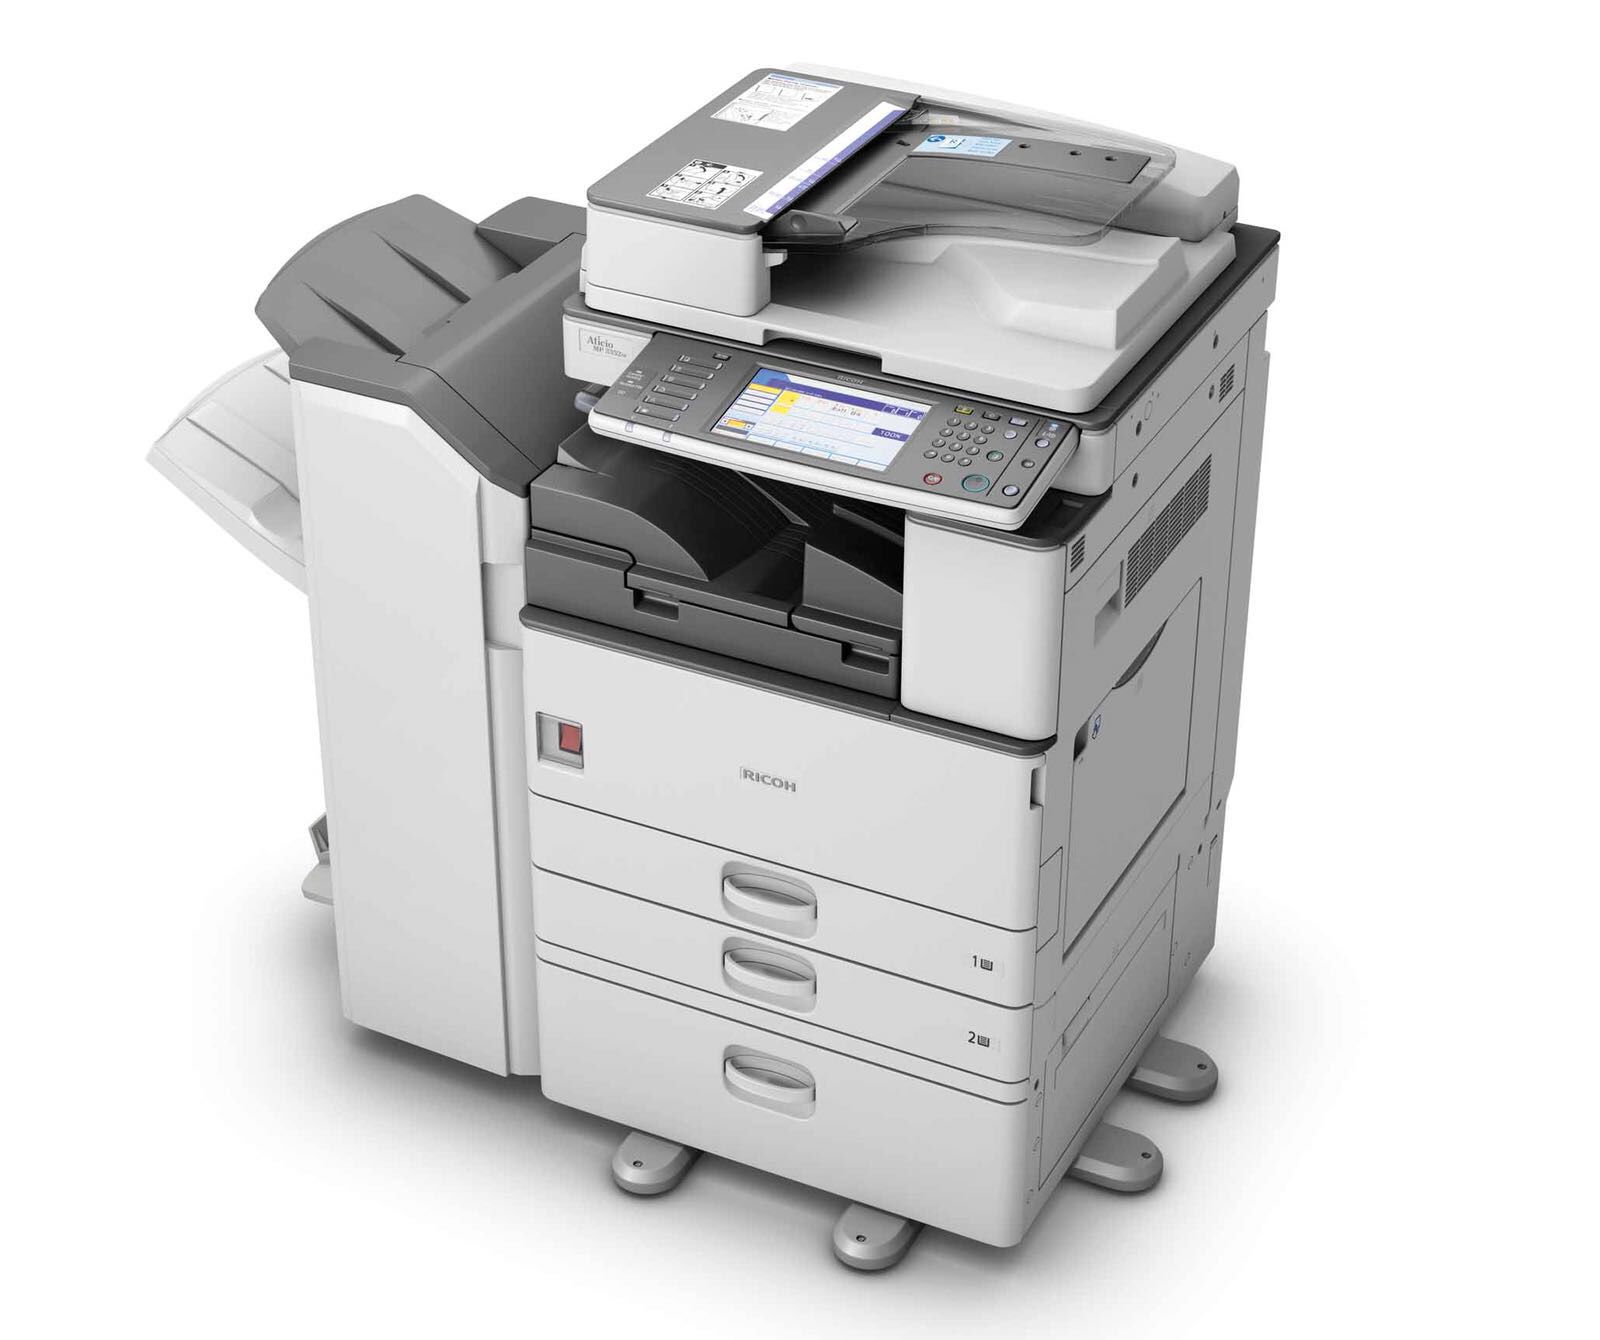 Printer multifunctional copier